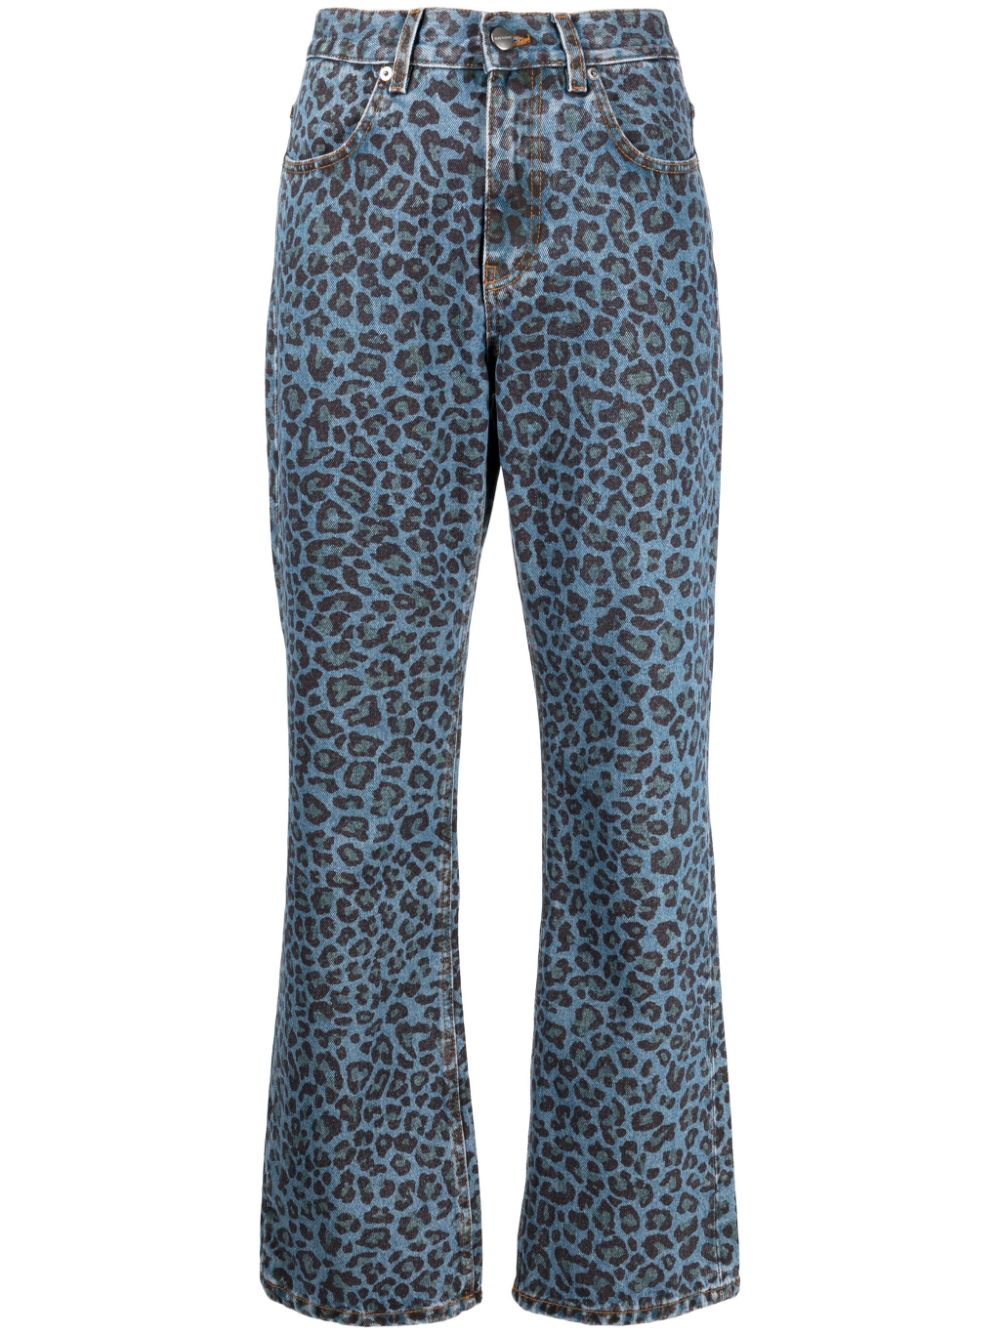 Molly Goddard Leopard-print Flared Jeans In Blue